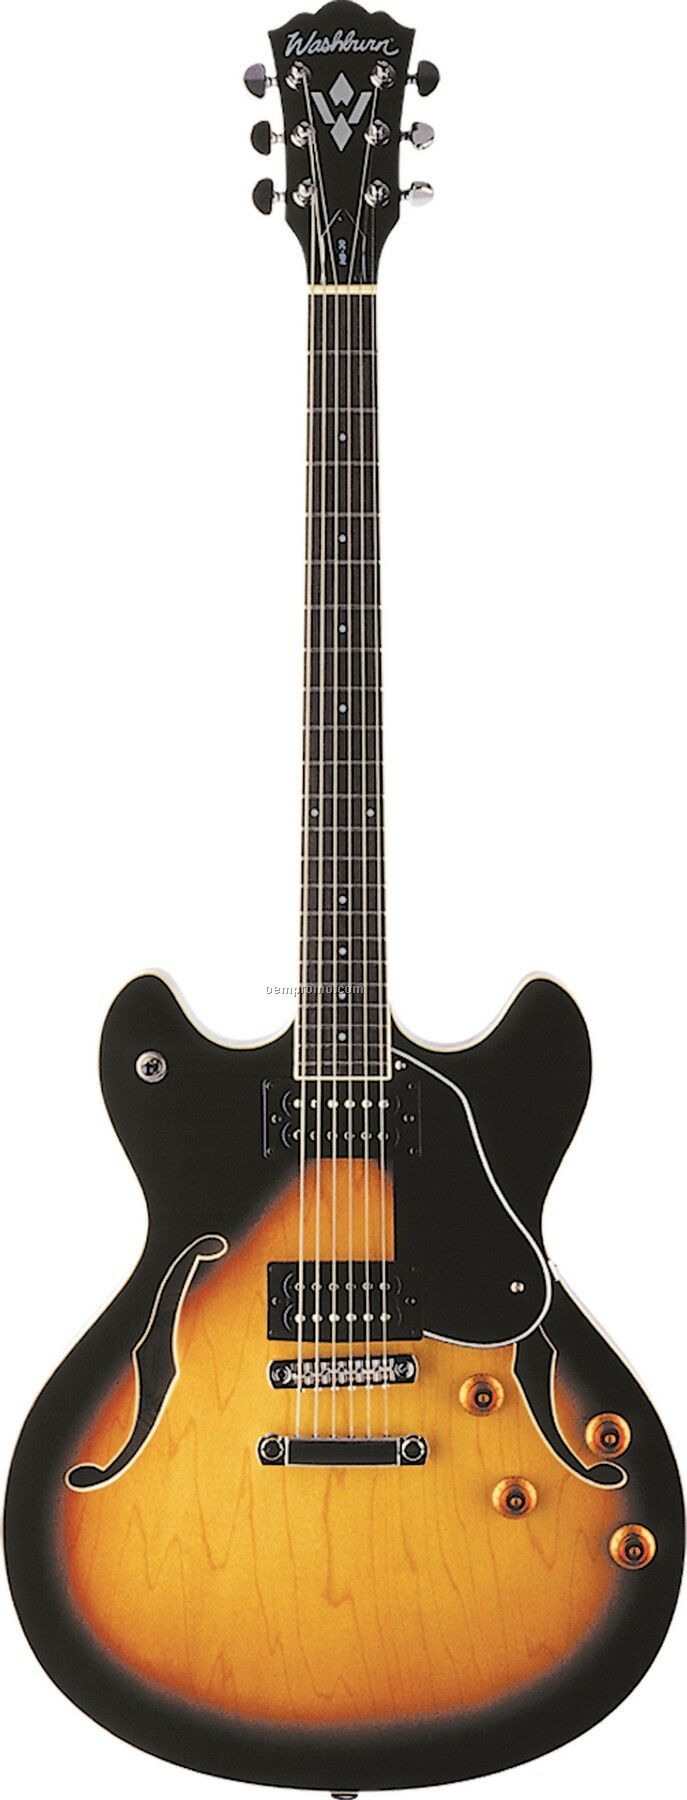 Washburn Hollowbody Series Electric Guitar